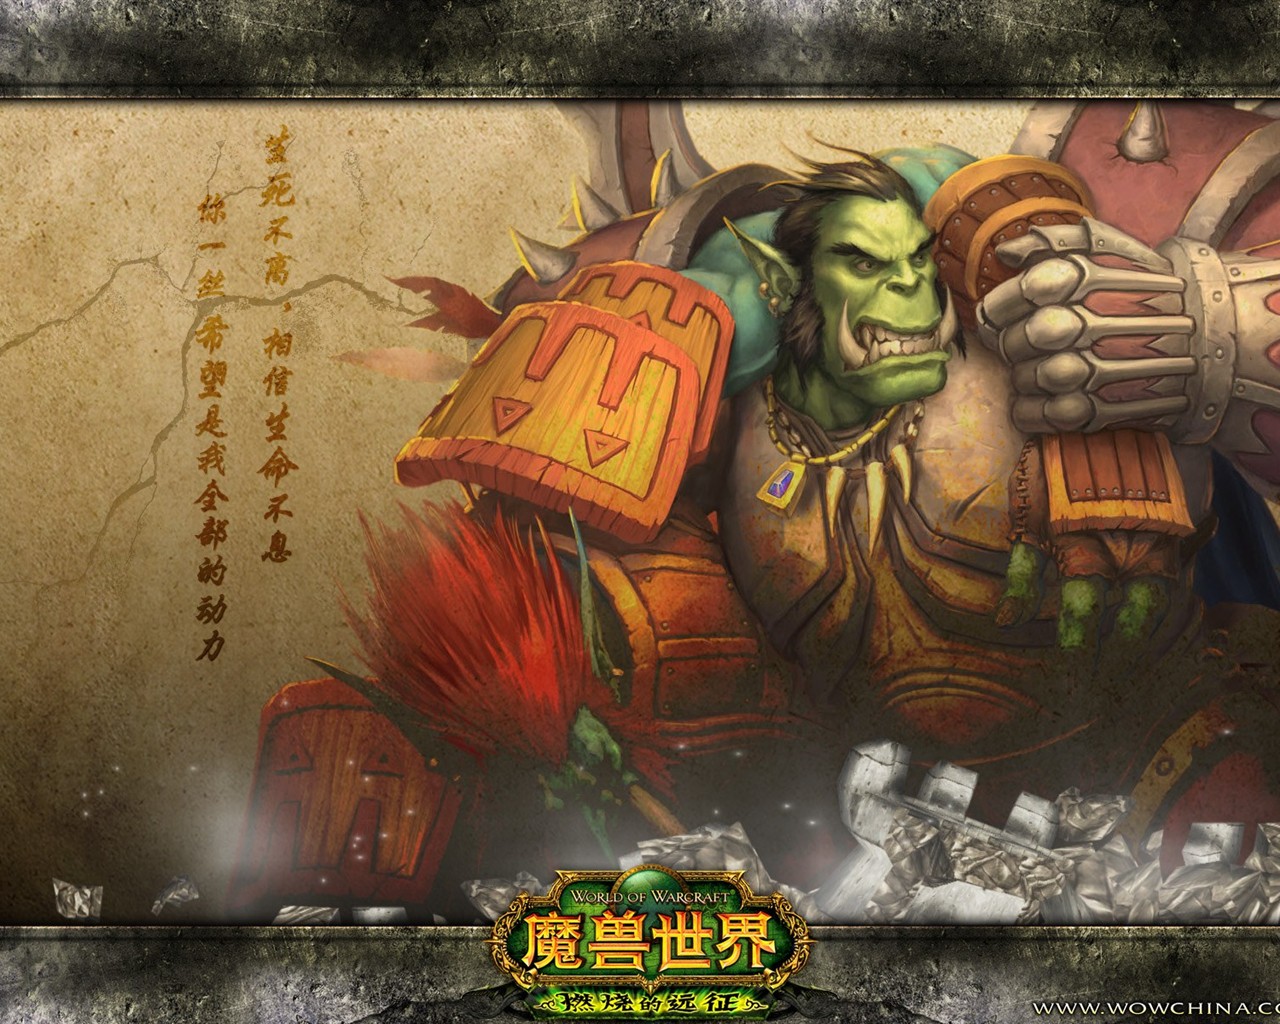 World of Warcraft: Fond d'écran officiel de Burning Crusade (2) #20 - 1280x1024